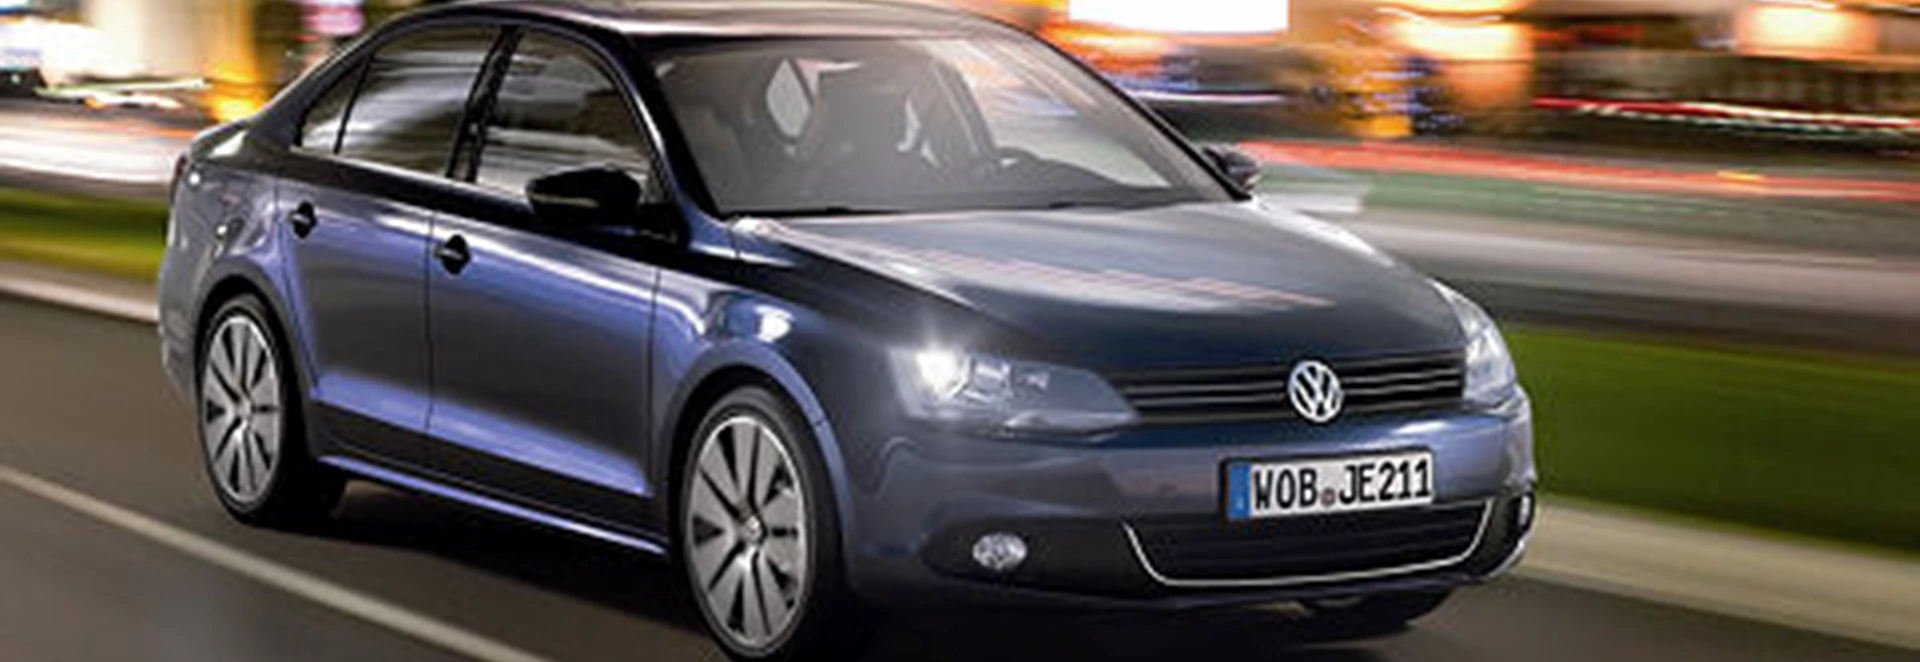 Volkswagen Jetta 1.6 TDI SE BlueMotion Technology (2011) 